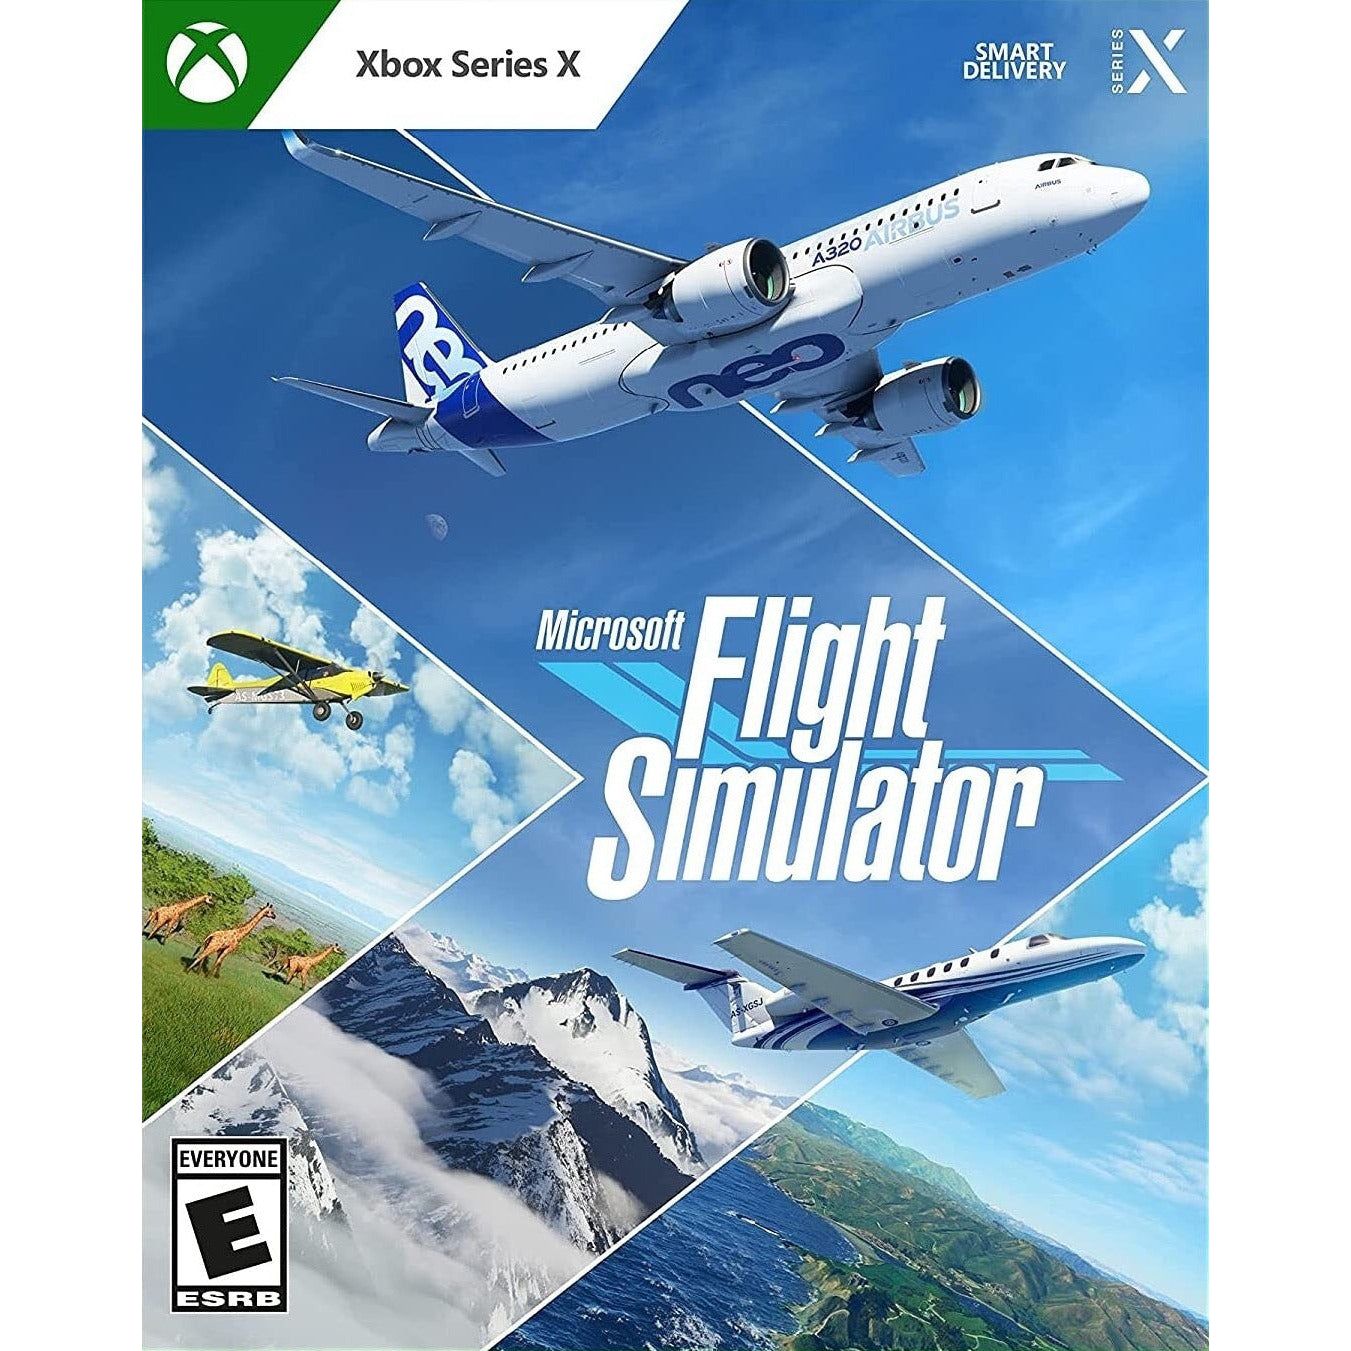 Xbox Series X - Microsoft Flight Simulator